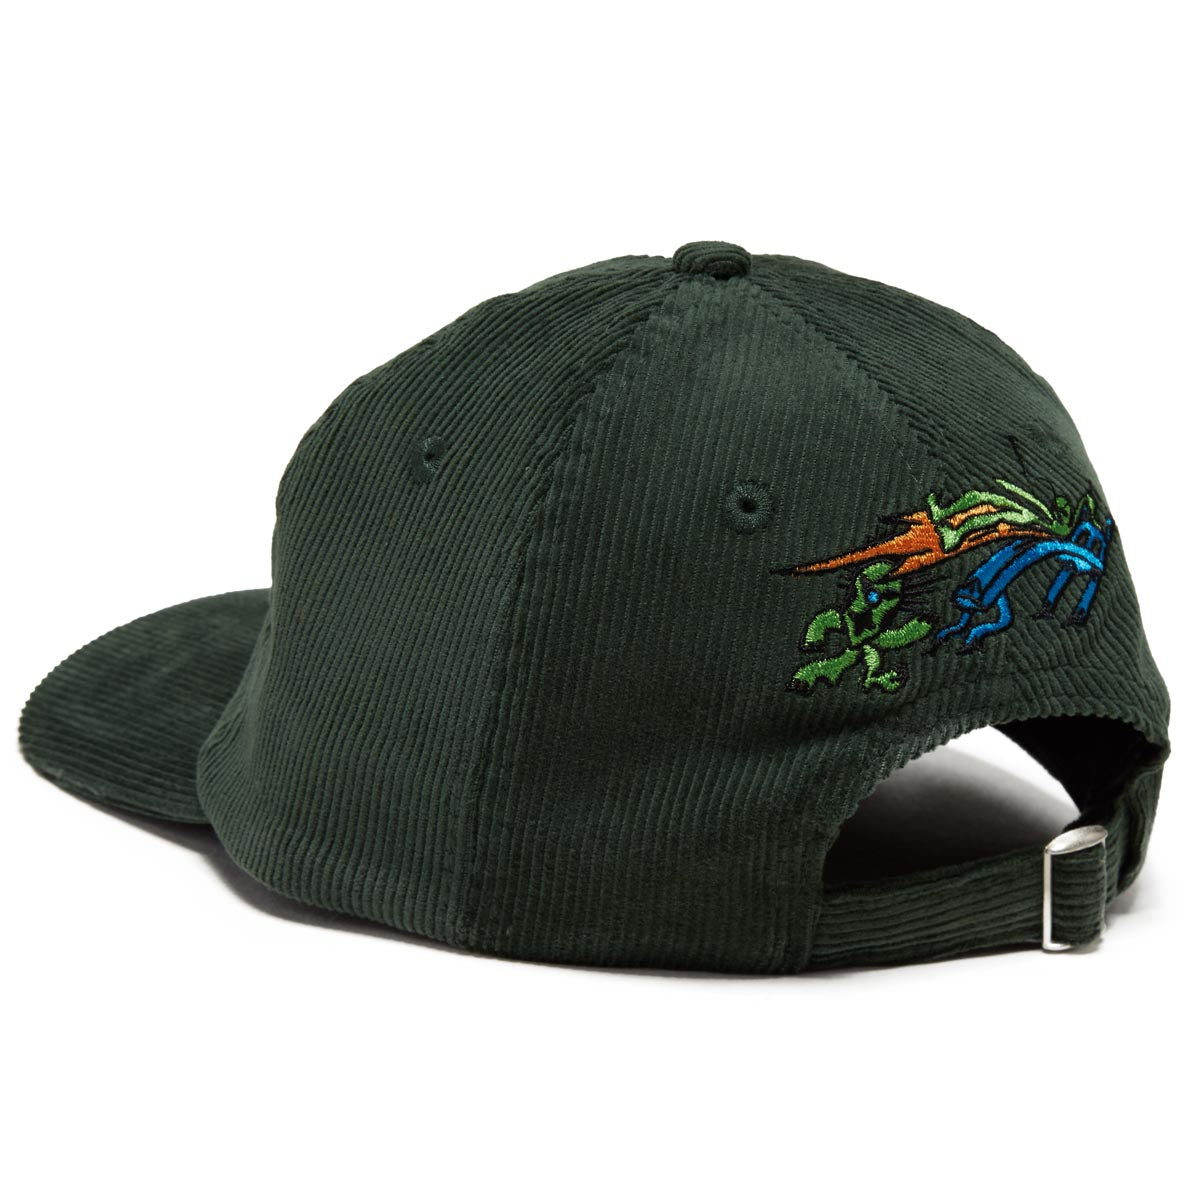 There Slumberland Strapback Hat - Green image 2